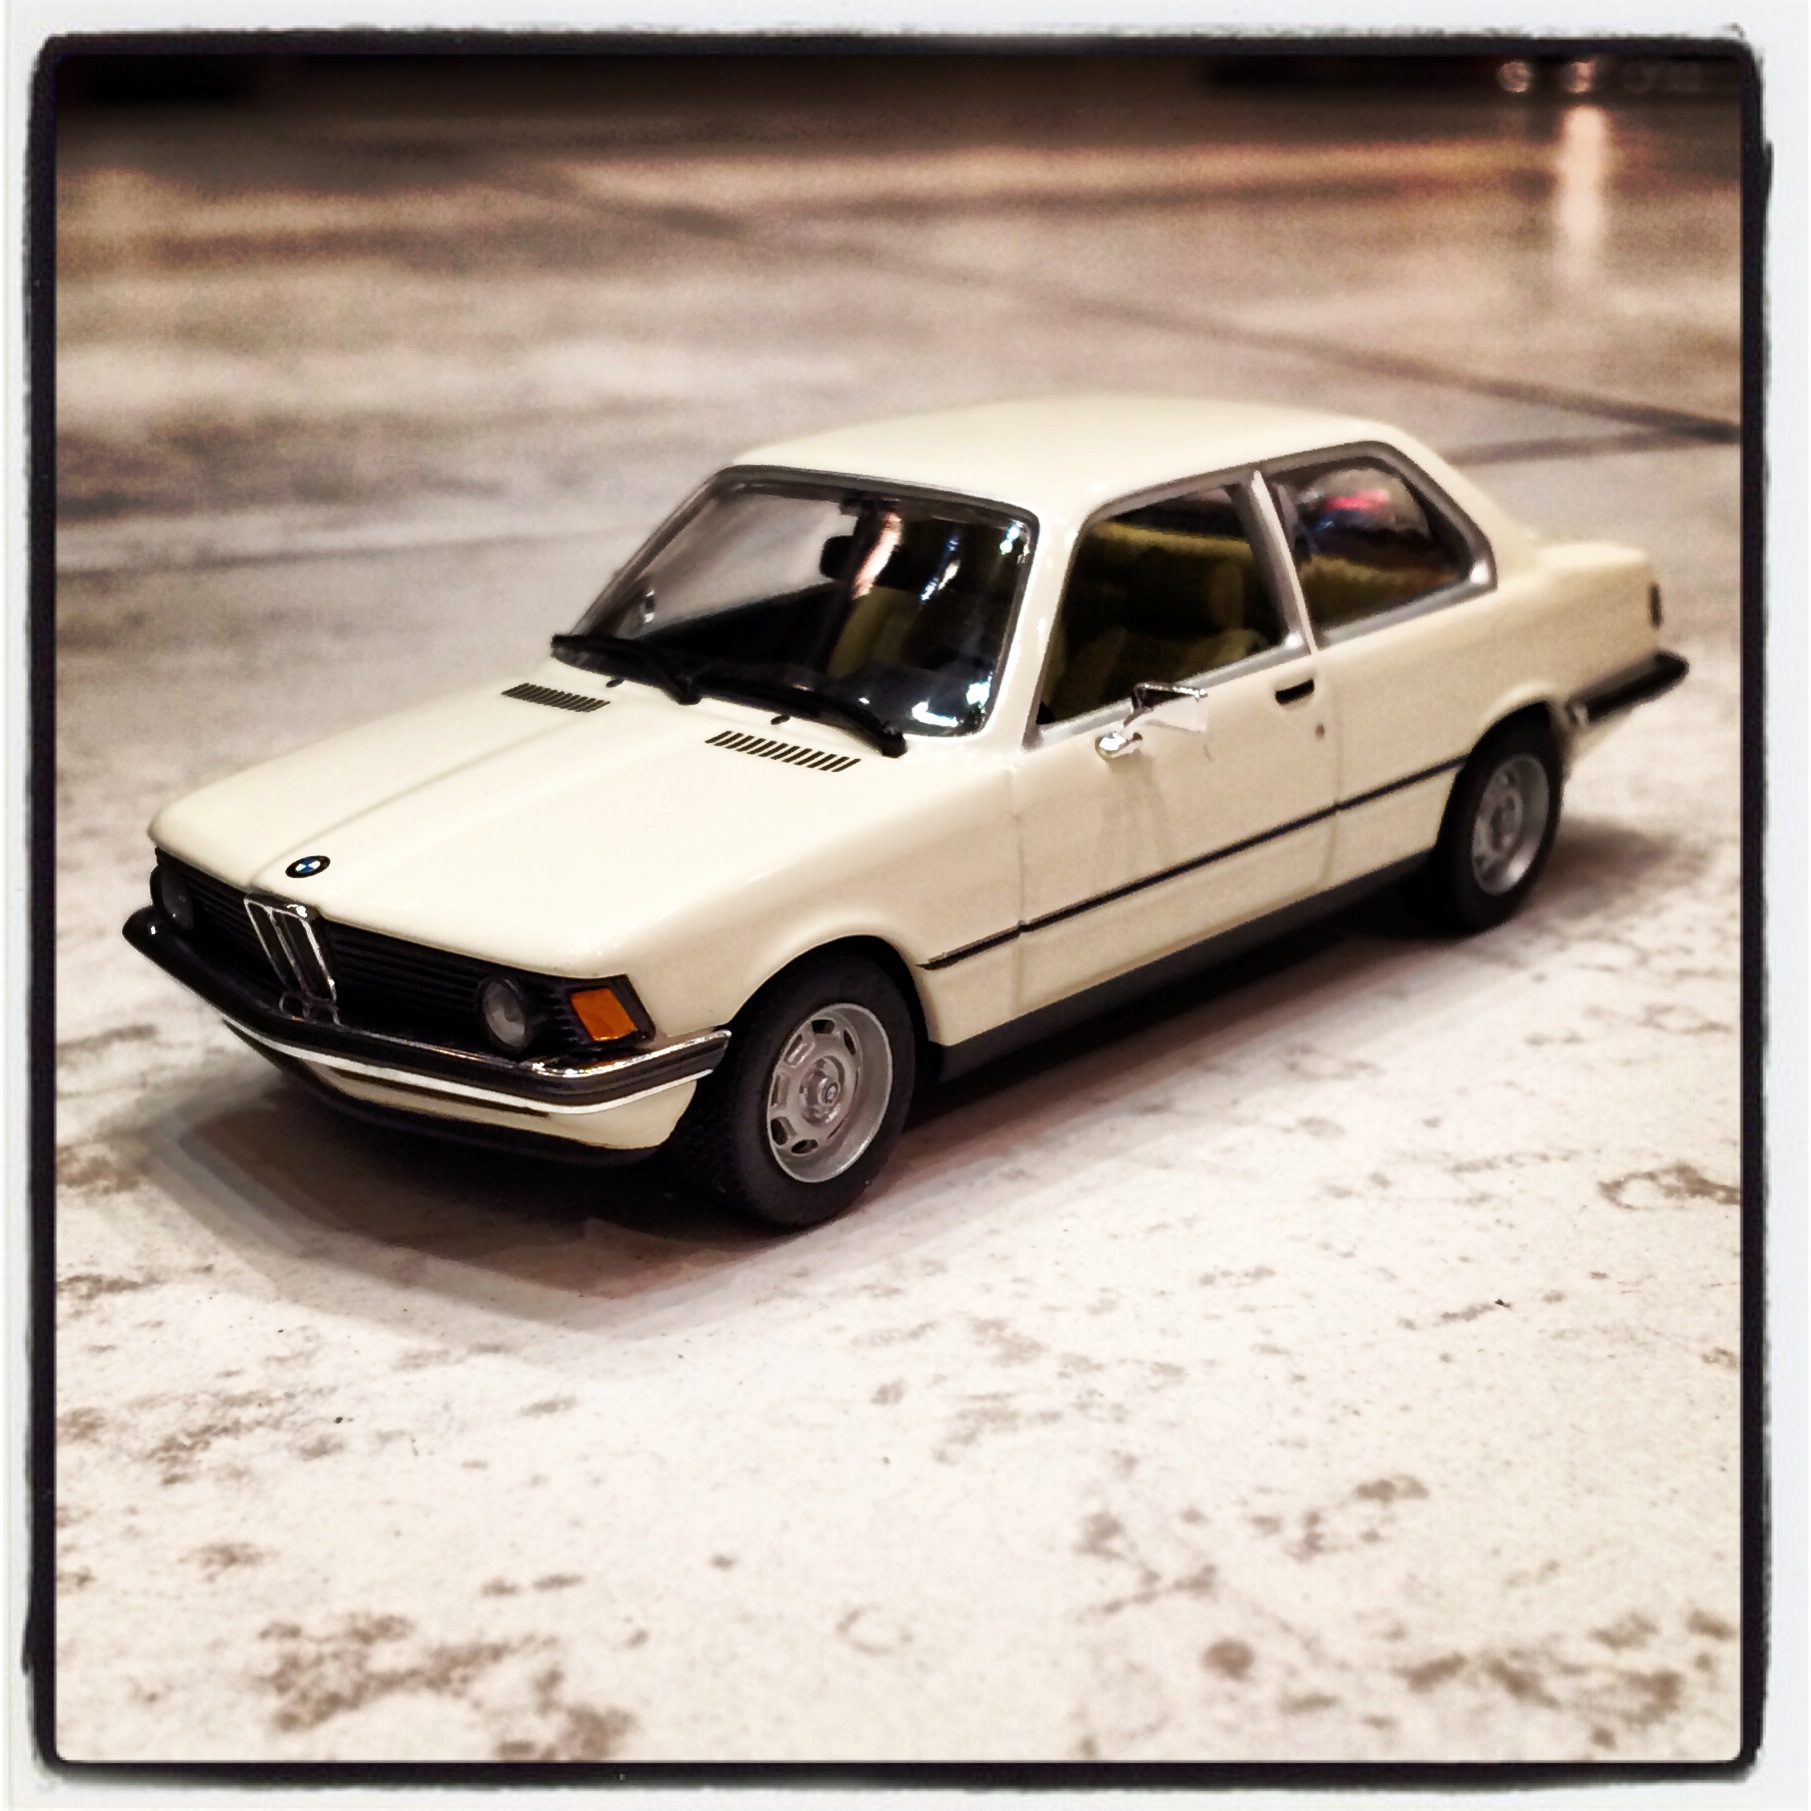 BMW 3 seris (E21) white (minichamps)